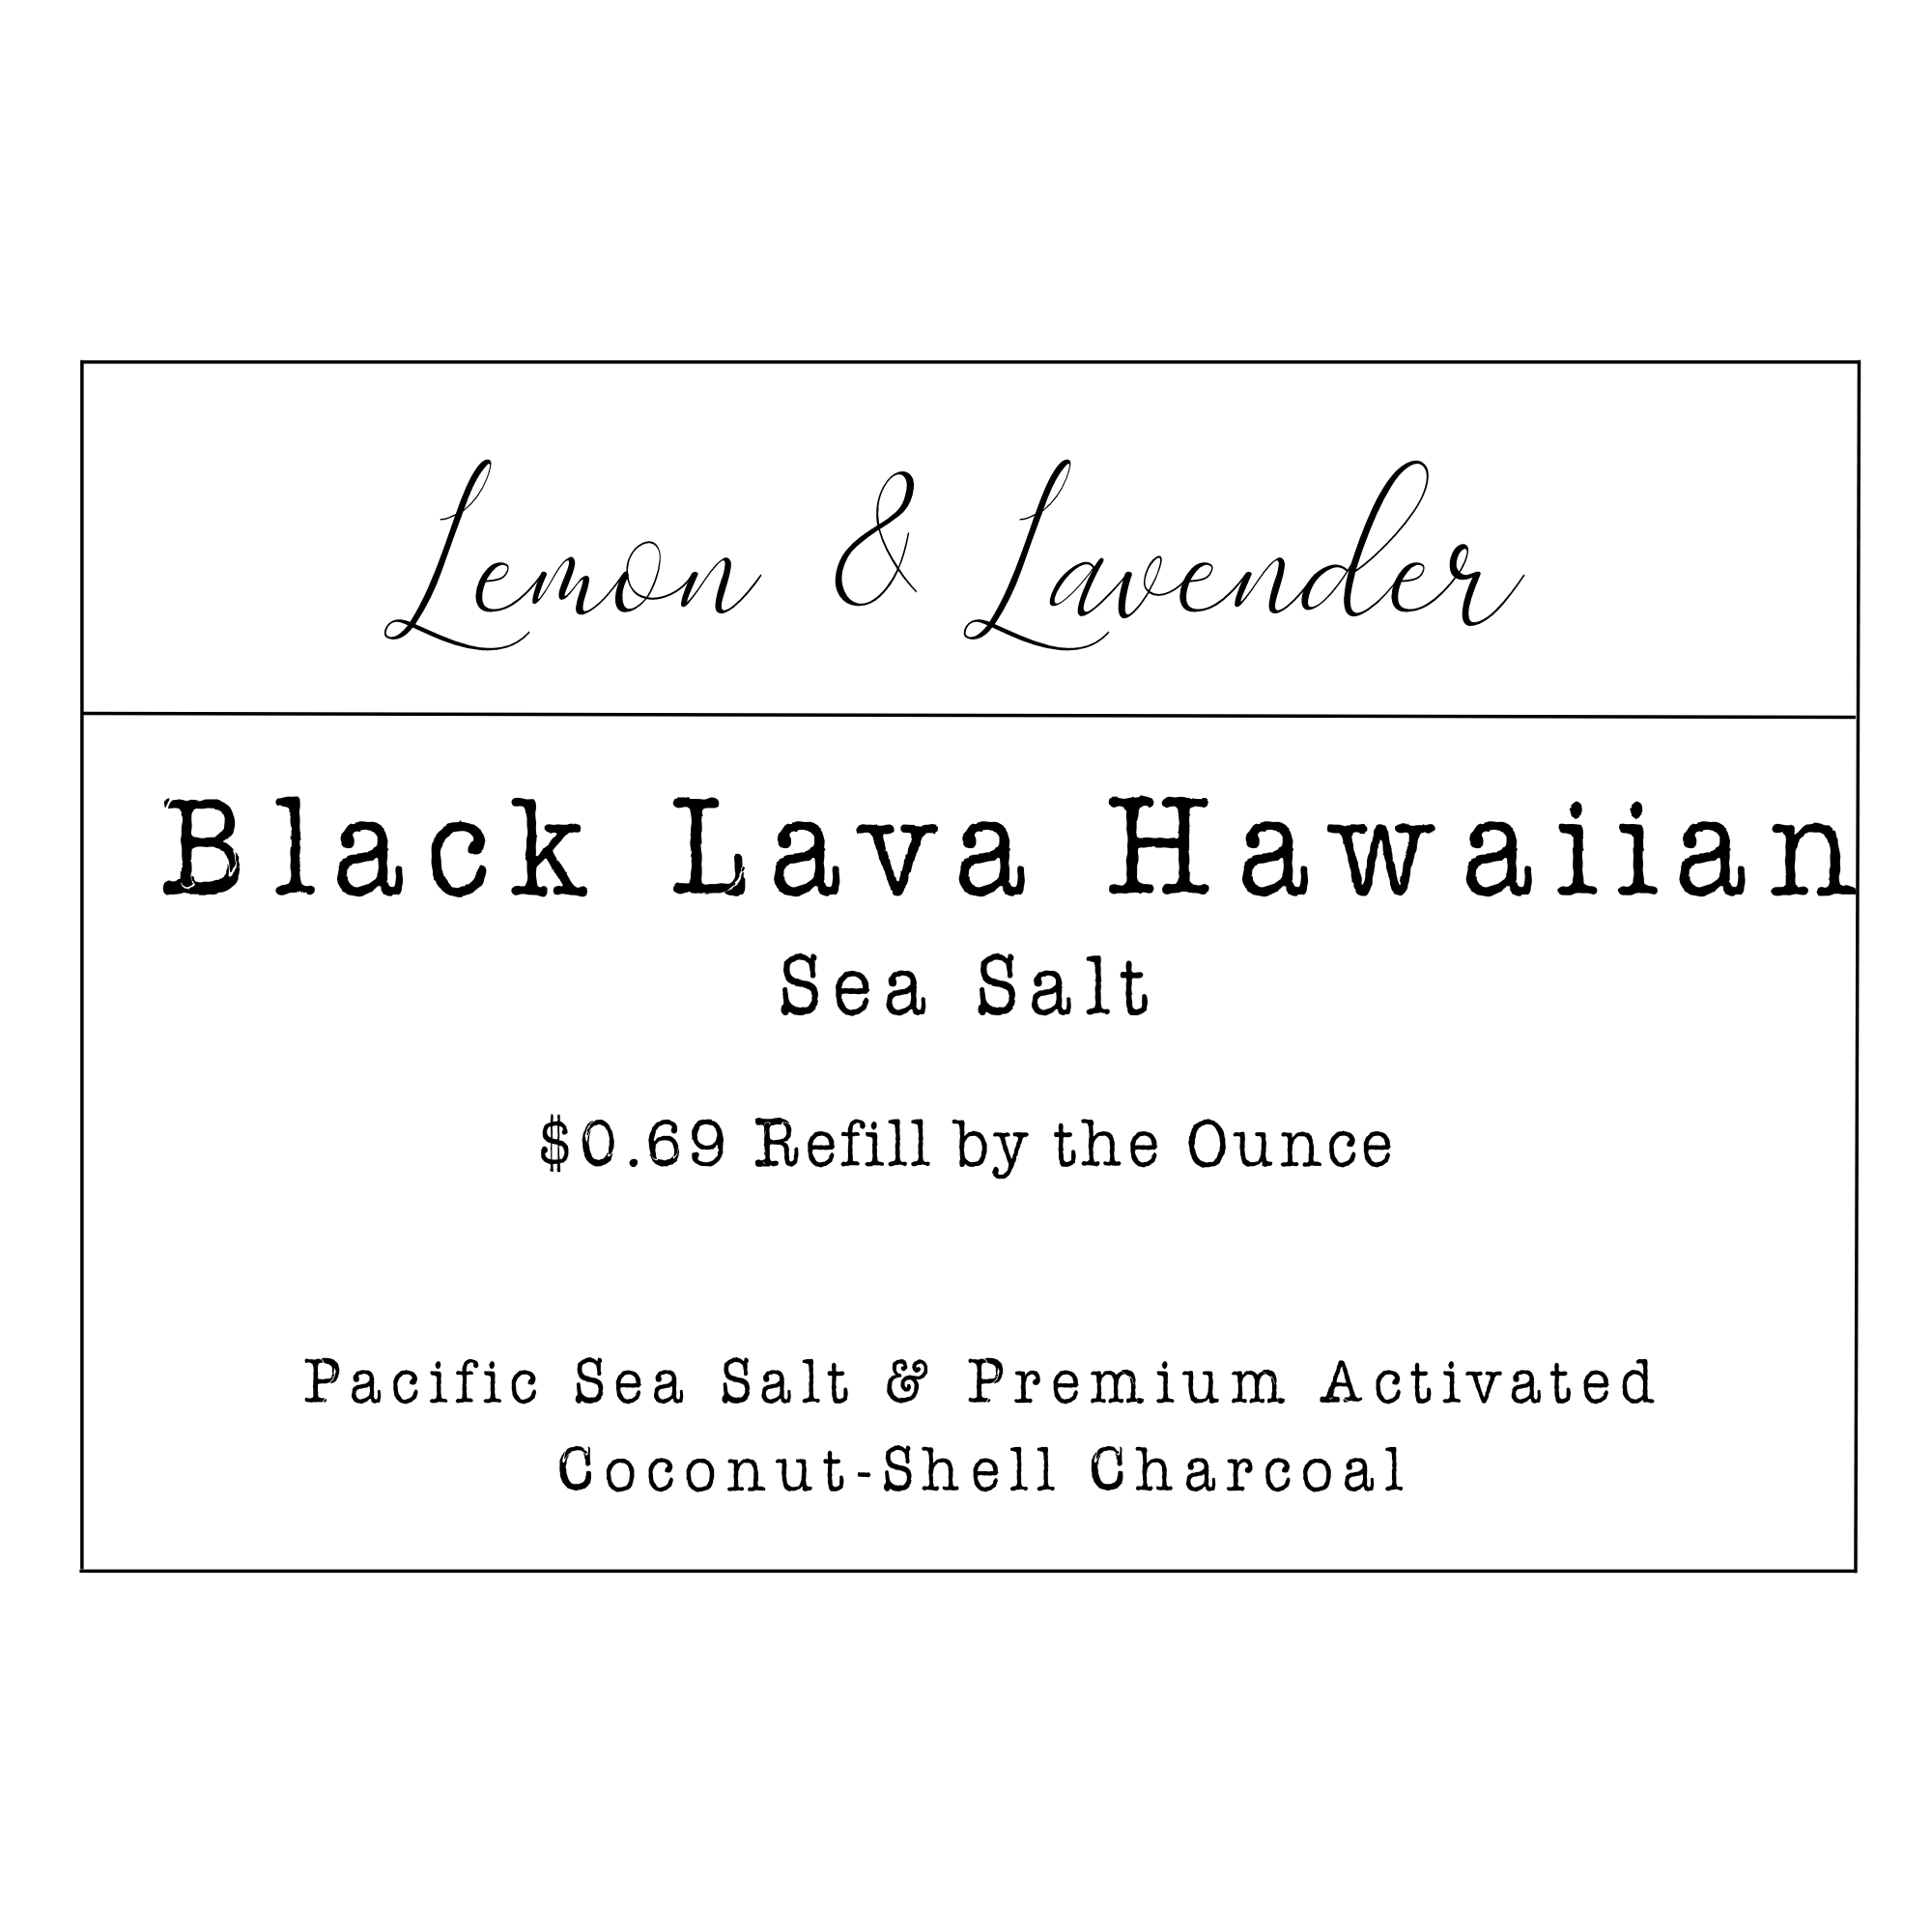 Refill by Ounce - Black Lava Hawaiian Sea Salt - Lemon & Lavender